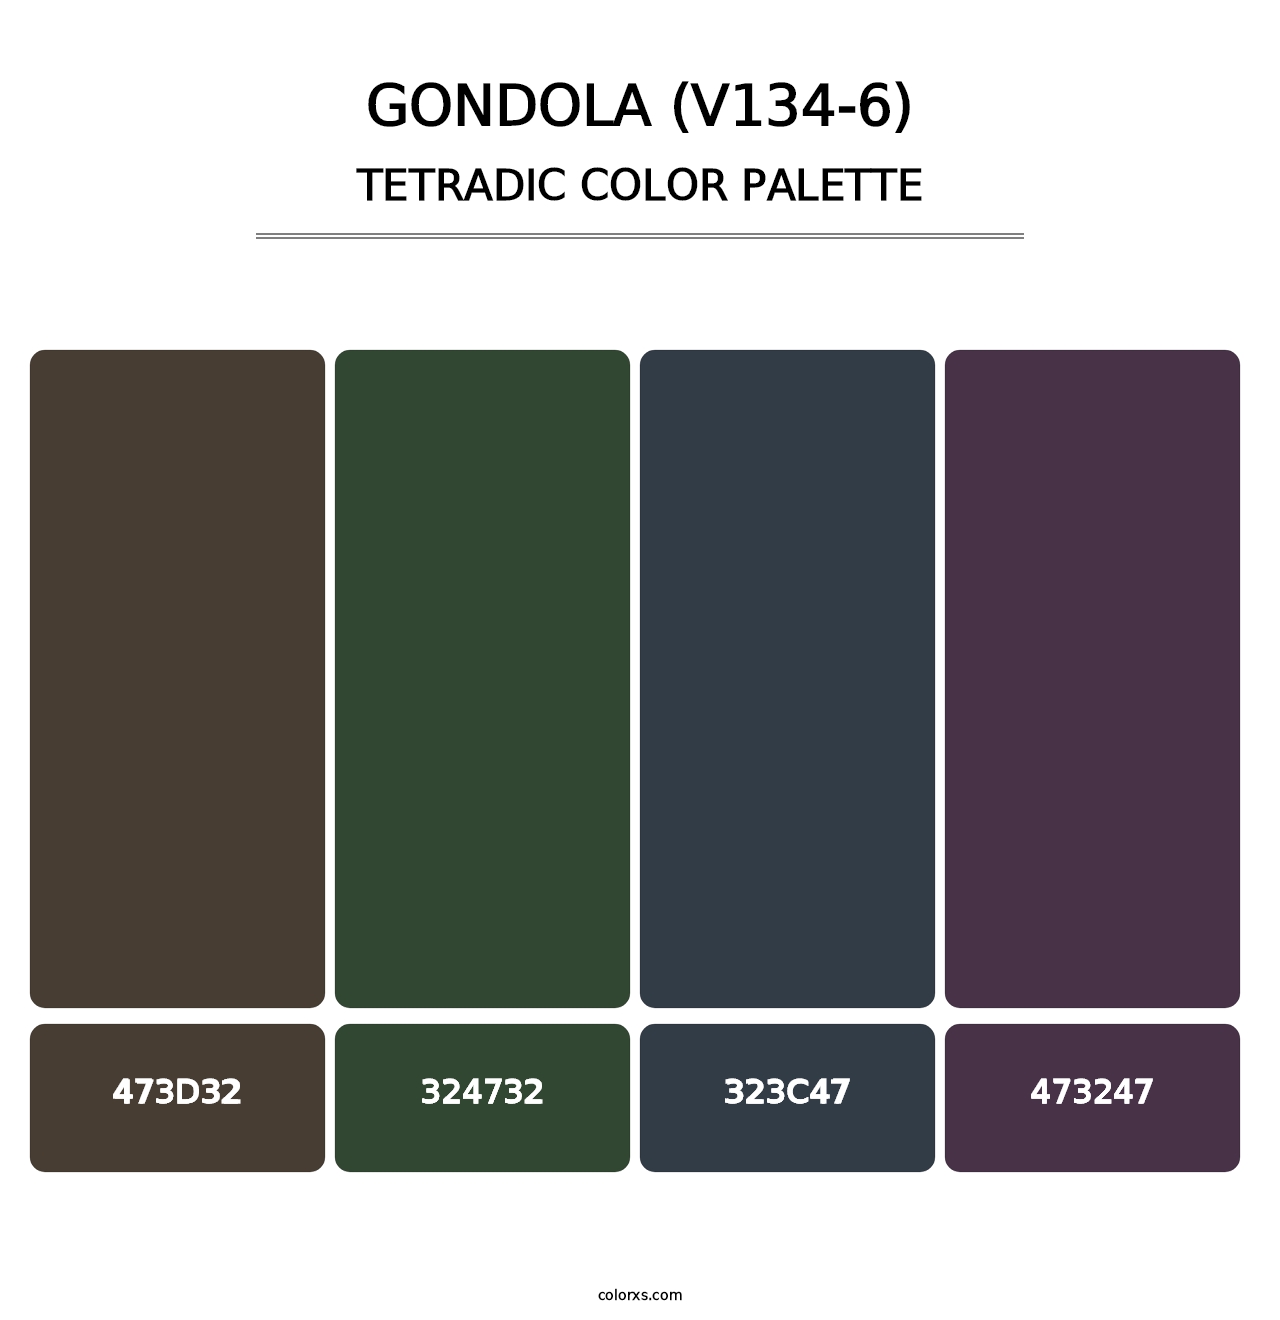 Gondola (V134-6) - Tetradic Color Palette